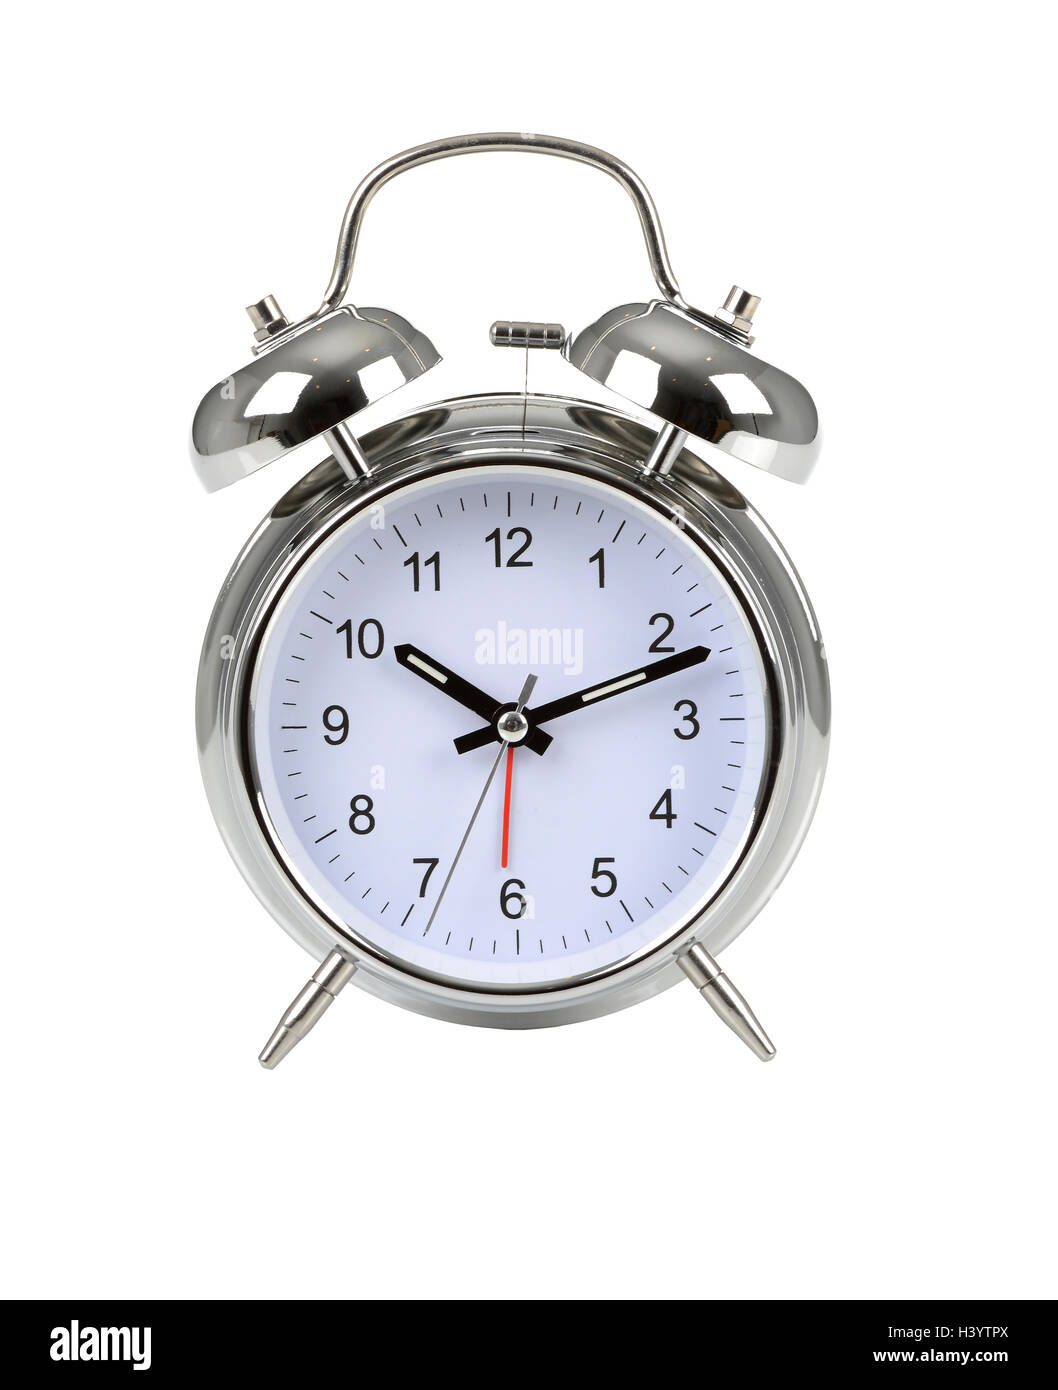 Alarm Clock, cut out of Alarm clock, alarm clock on a white background Stock Photo